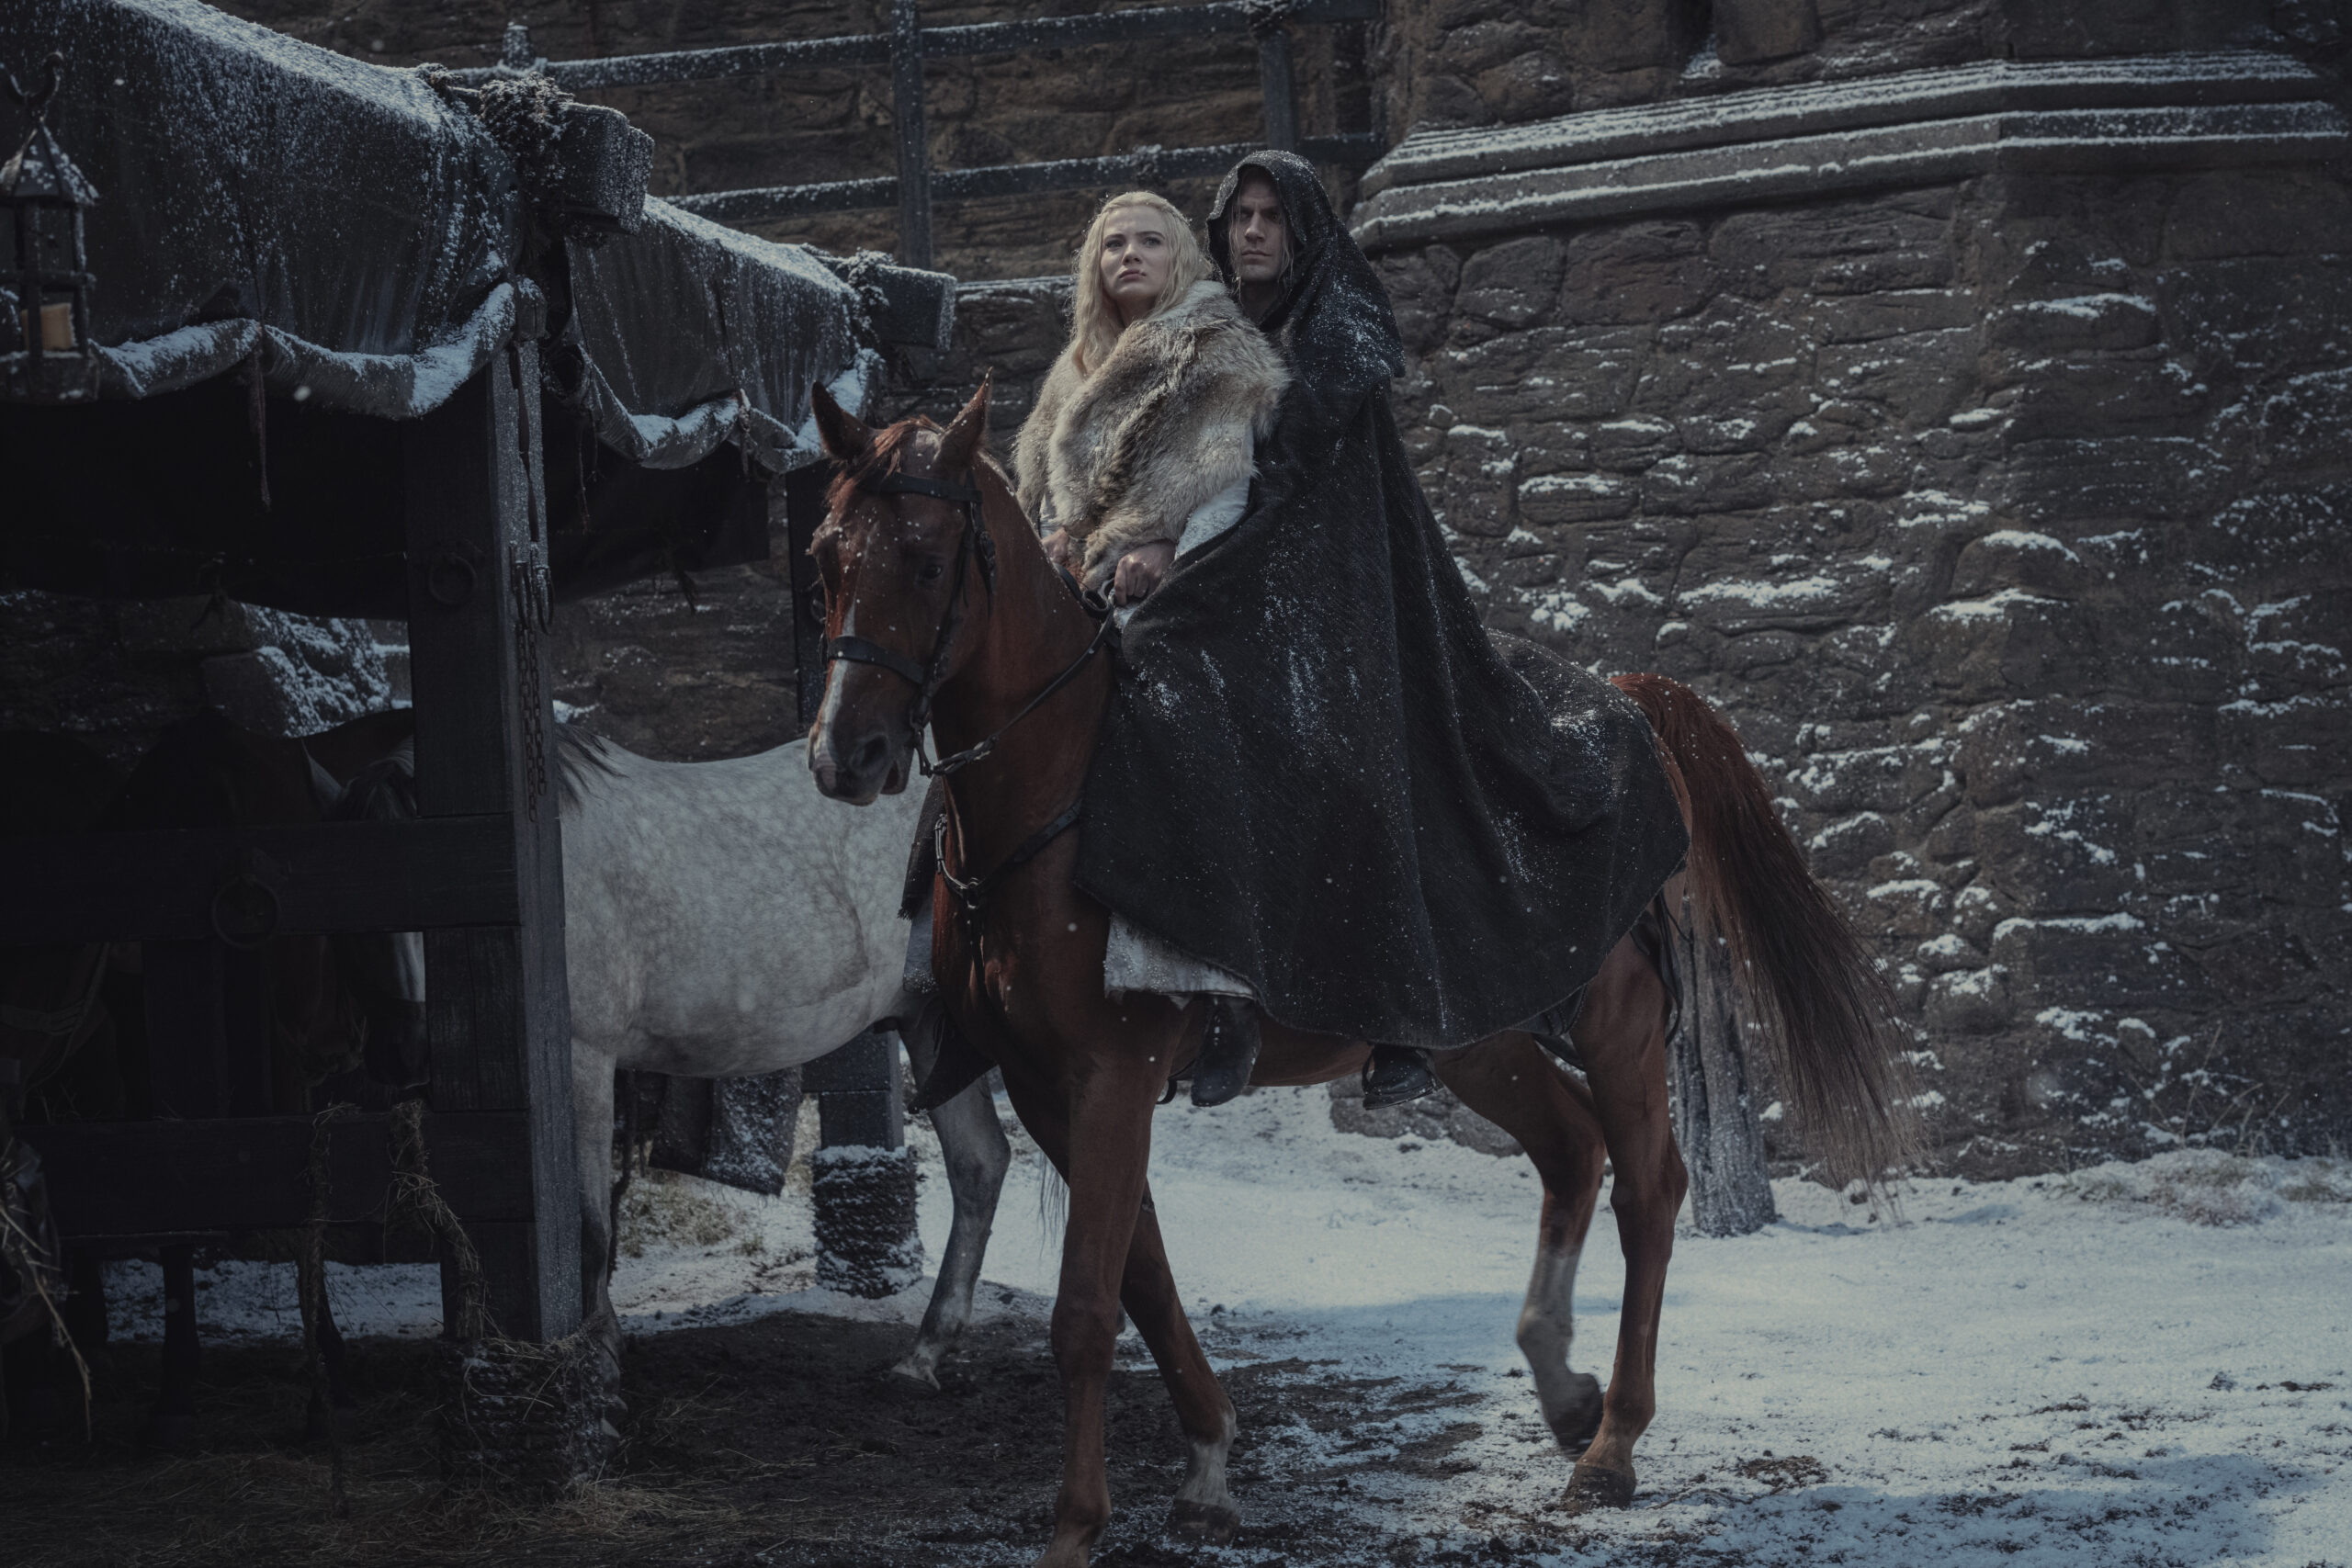 Geralt (Henry Cavill) and Ciri (Freya Allan) arrive in Kaer Morhenin The Witcher Season 2 Episode 2 “Kaer Morhen” (2021) via Netflix